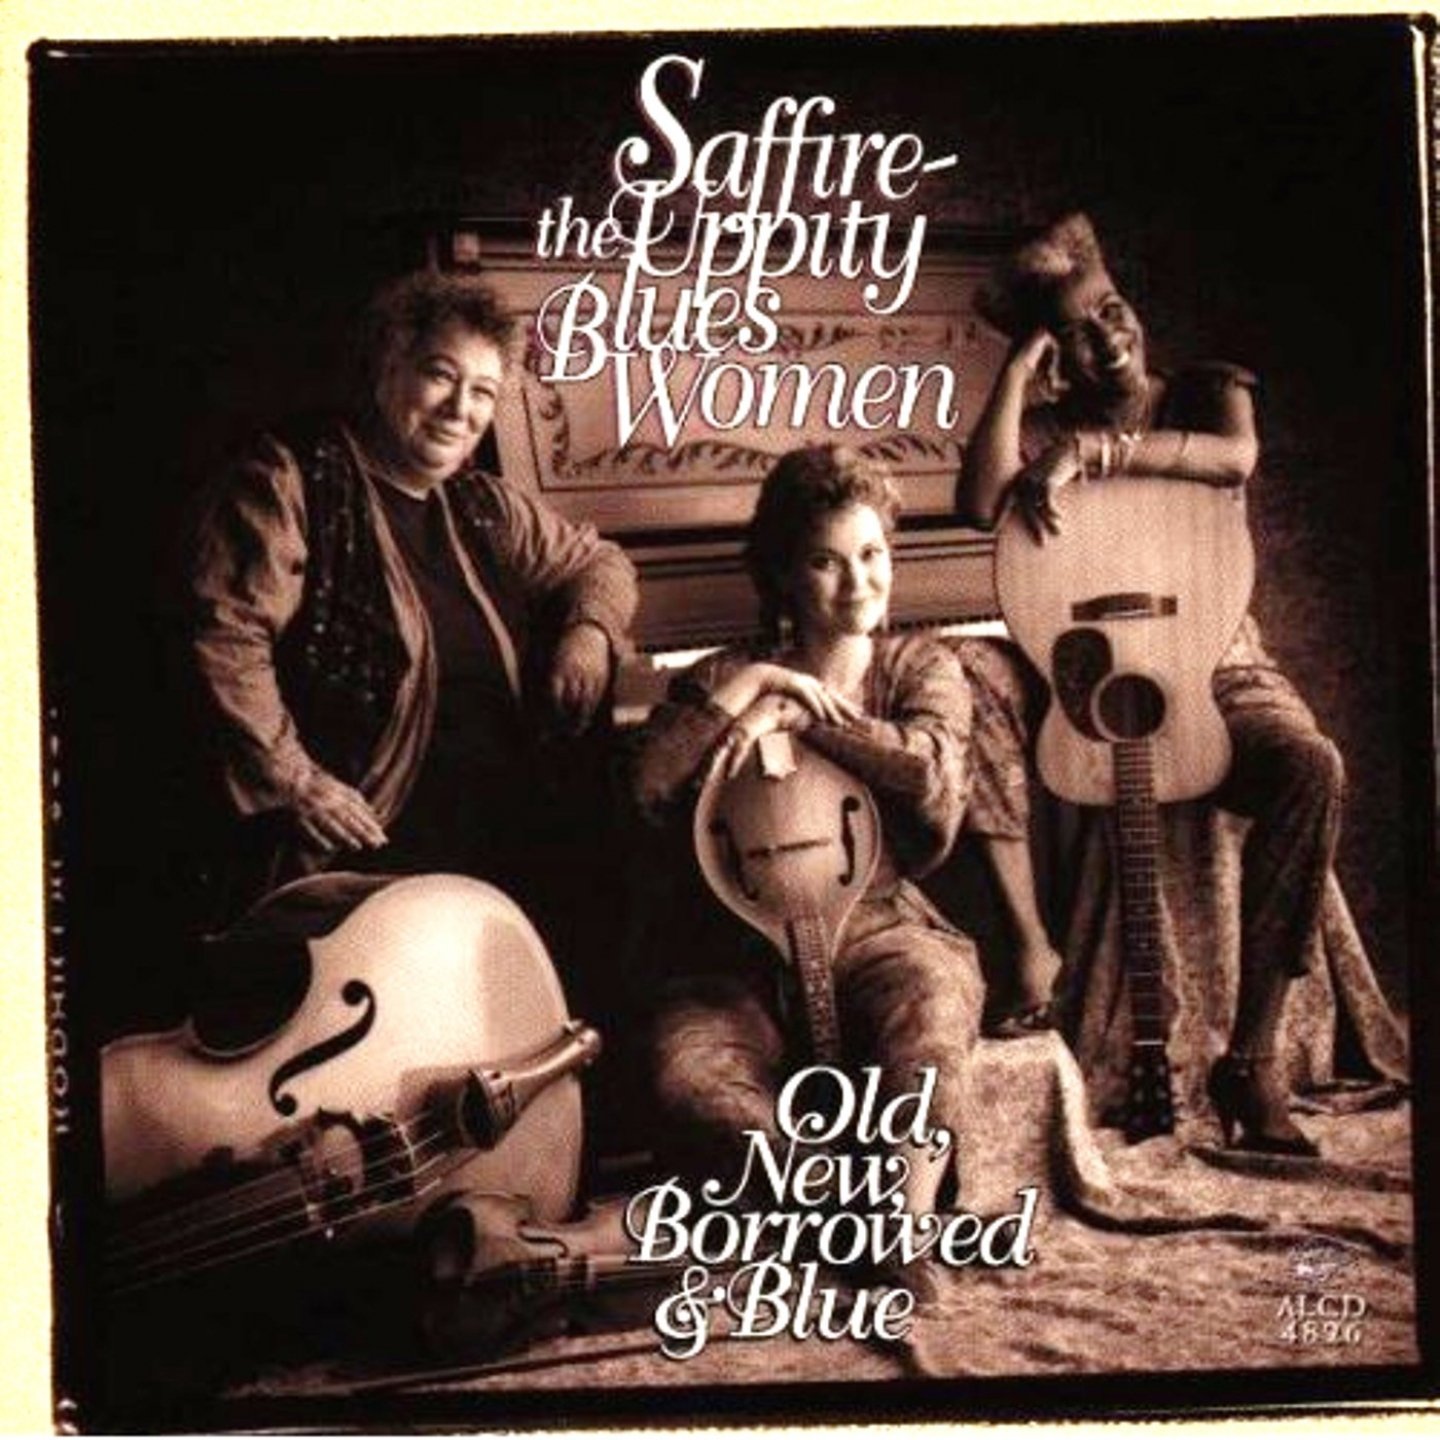 Old new day. Saffire - old, New, Borrowed & Blue. Saffire the uppity Blues women. Saffire группа. Old New Borrowed and Blue.